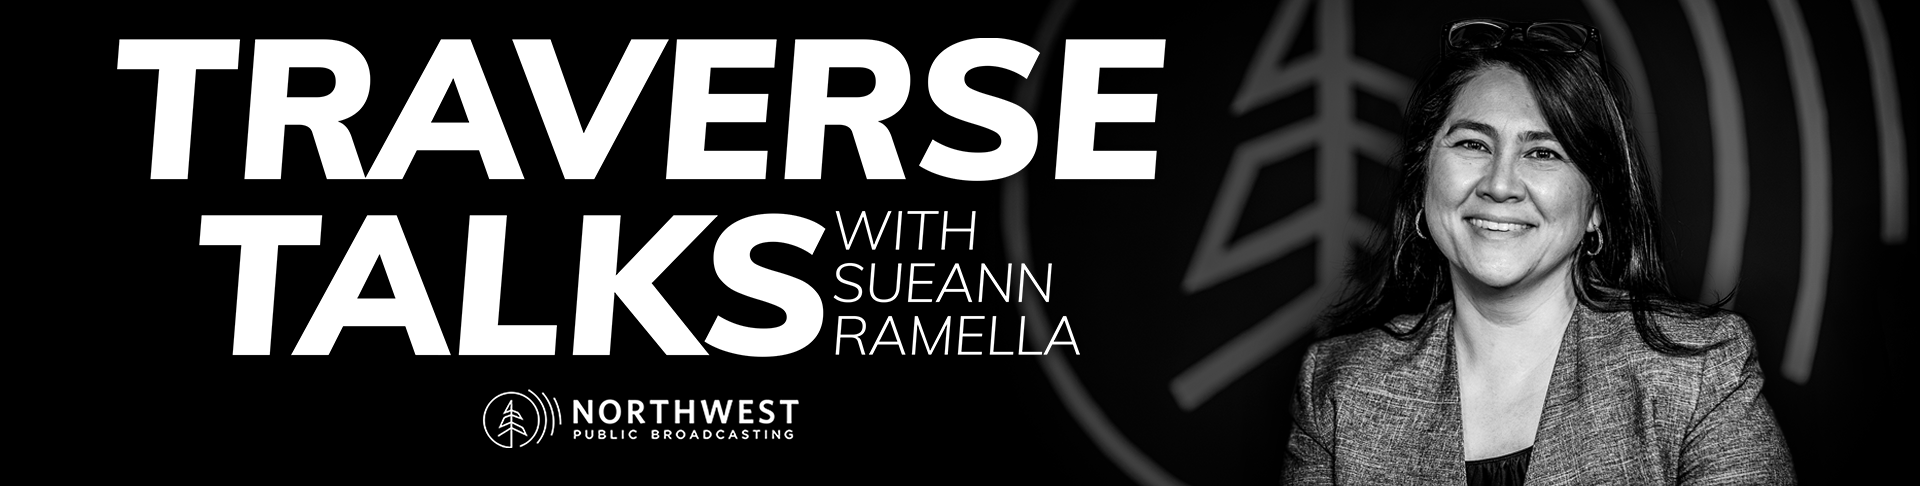 Traverse Talks With Sueann Ramella